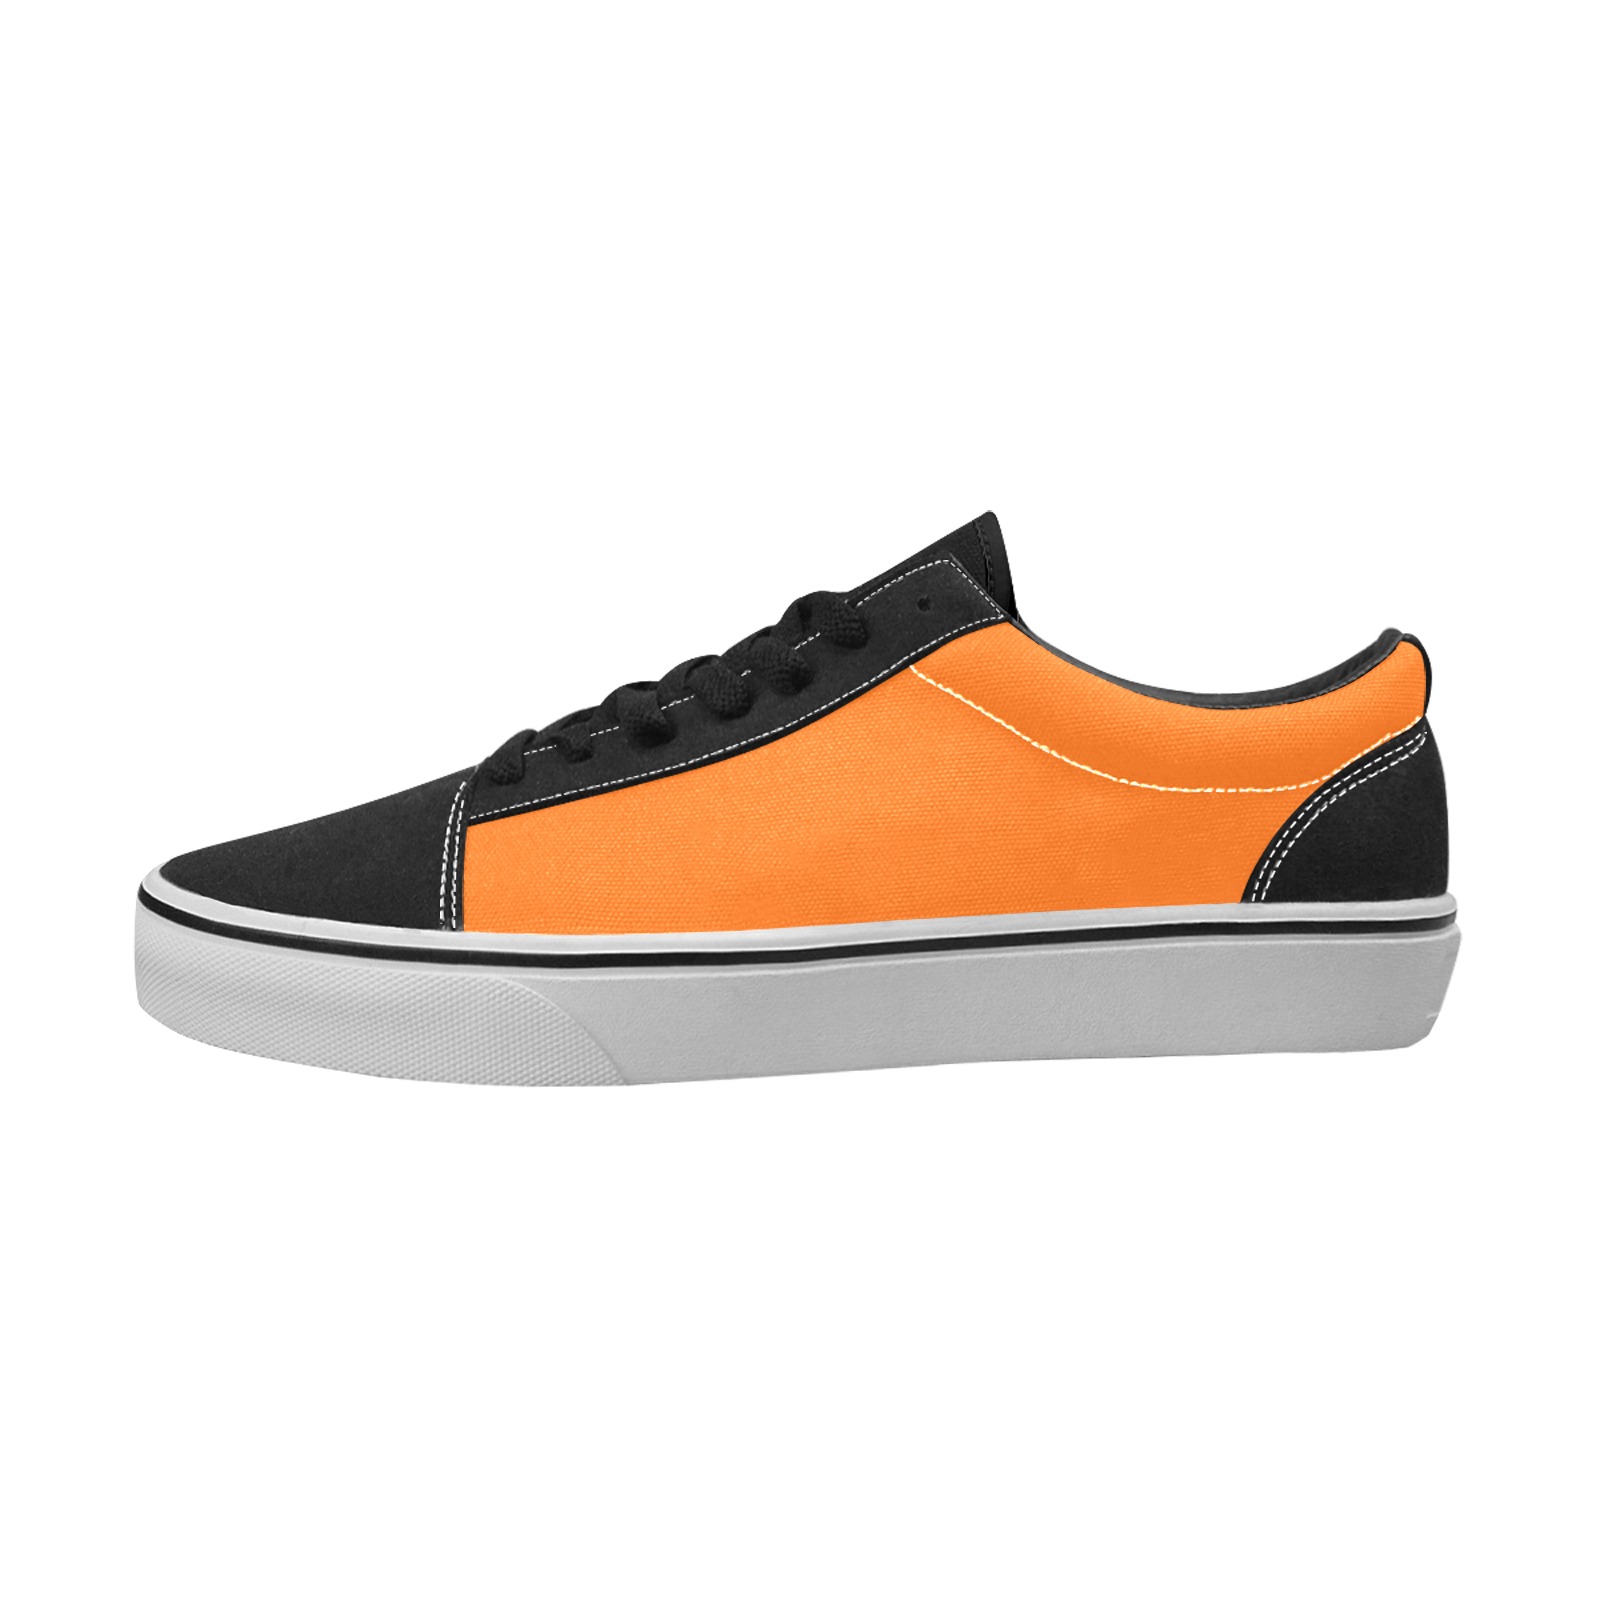 color pumpkin Women's Low Top Skateboarding Shoes (Model E001-2)